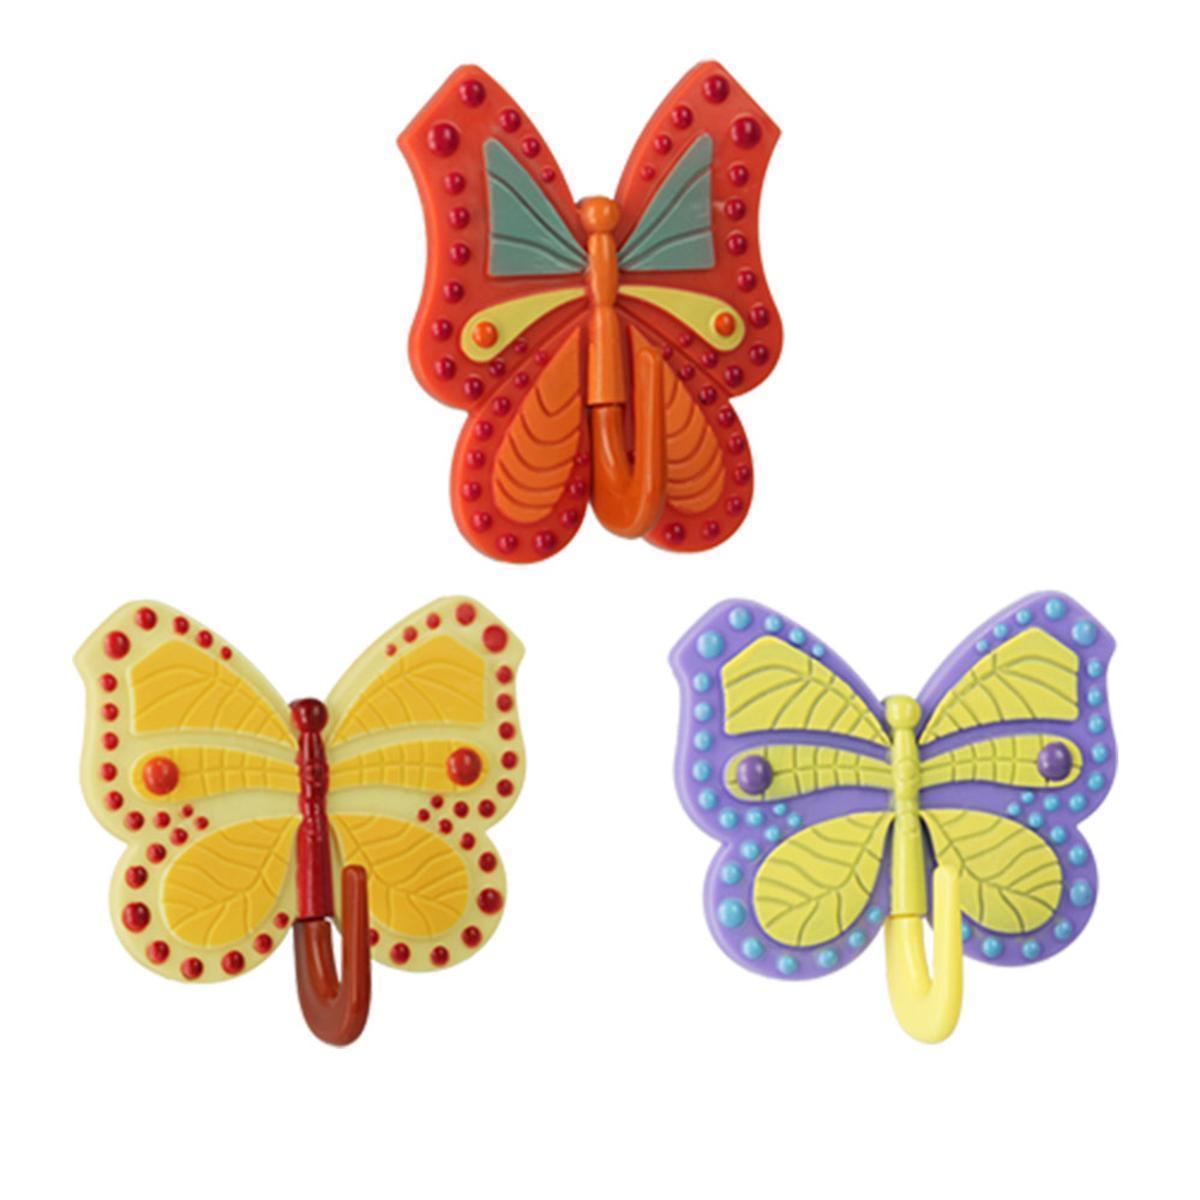 Crochet adhésif design papillon